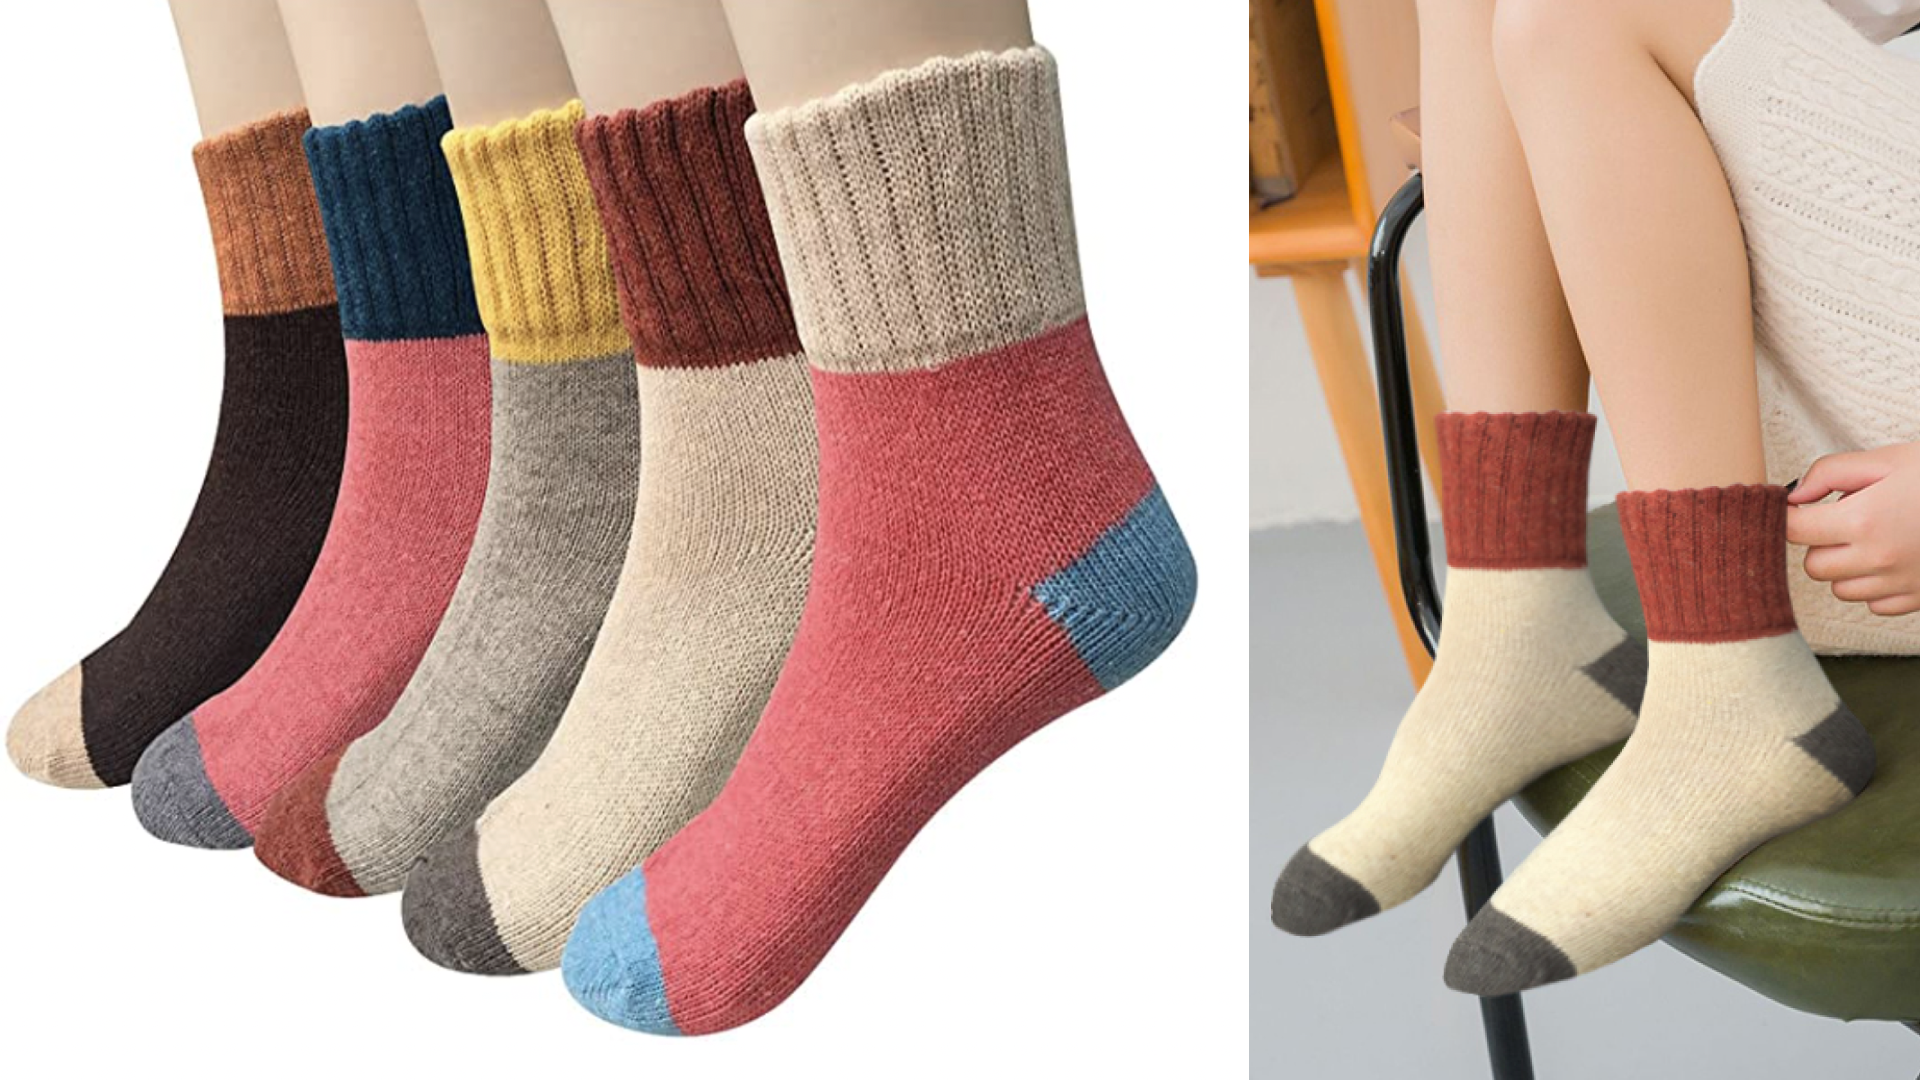 Cozy, wool socks